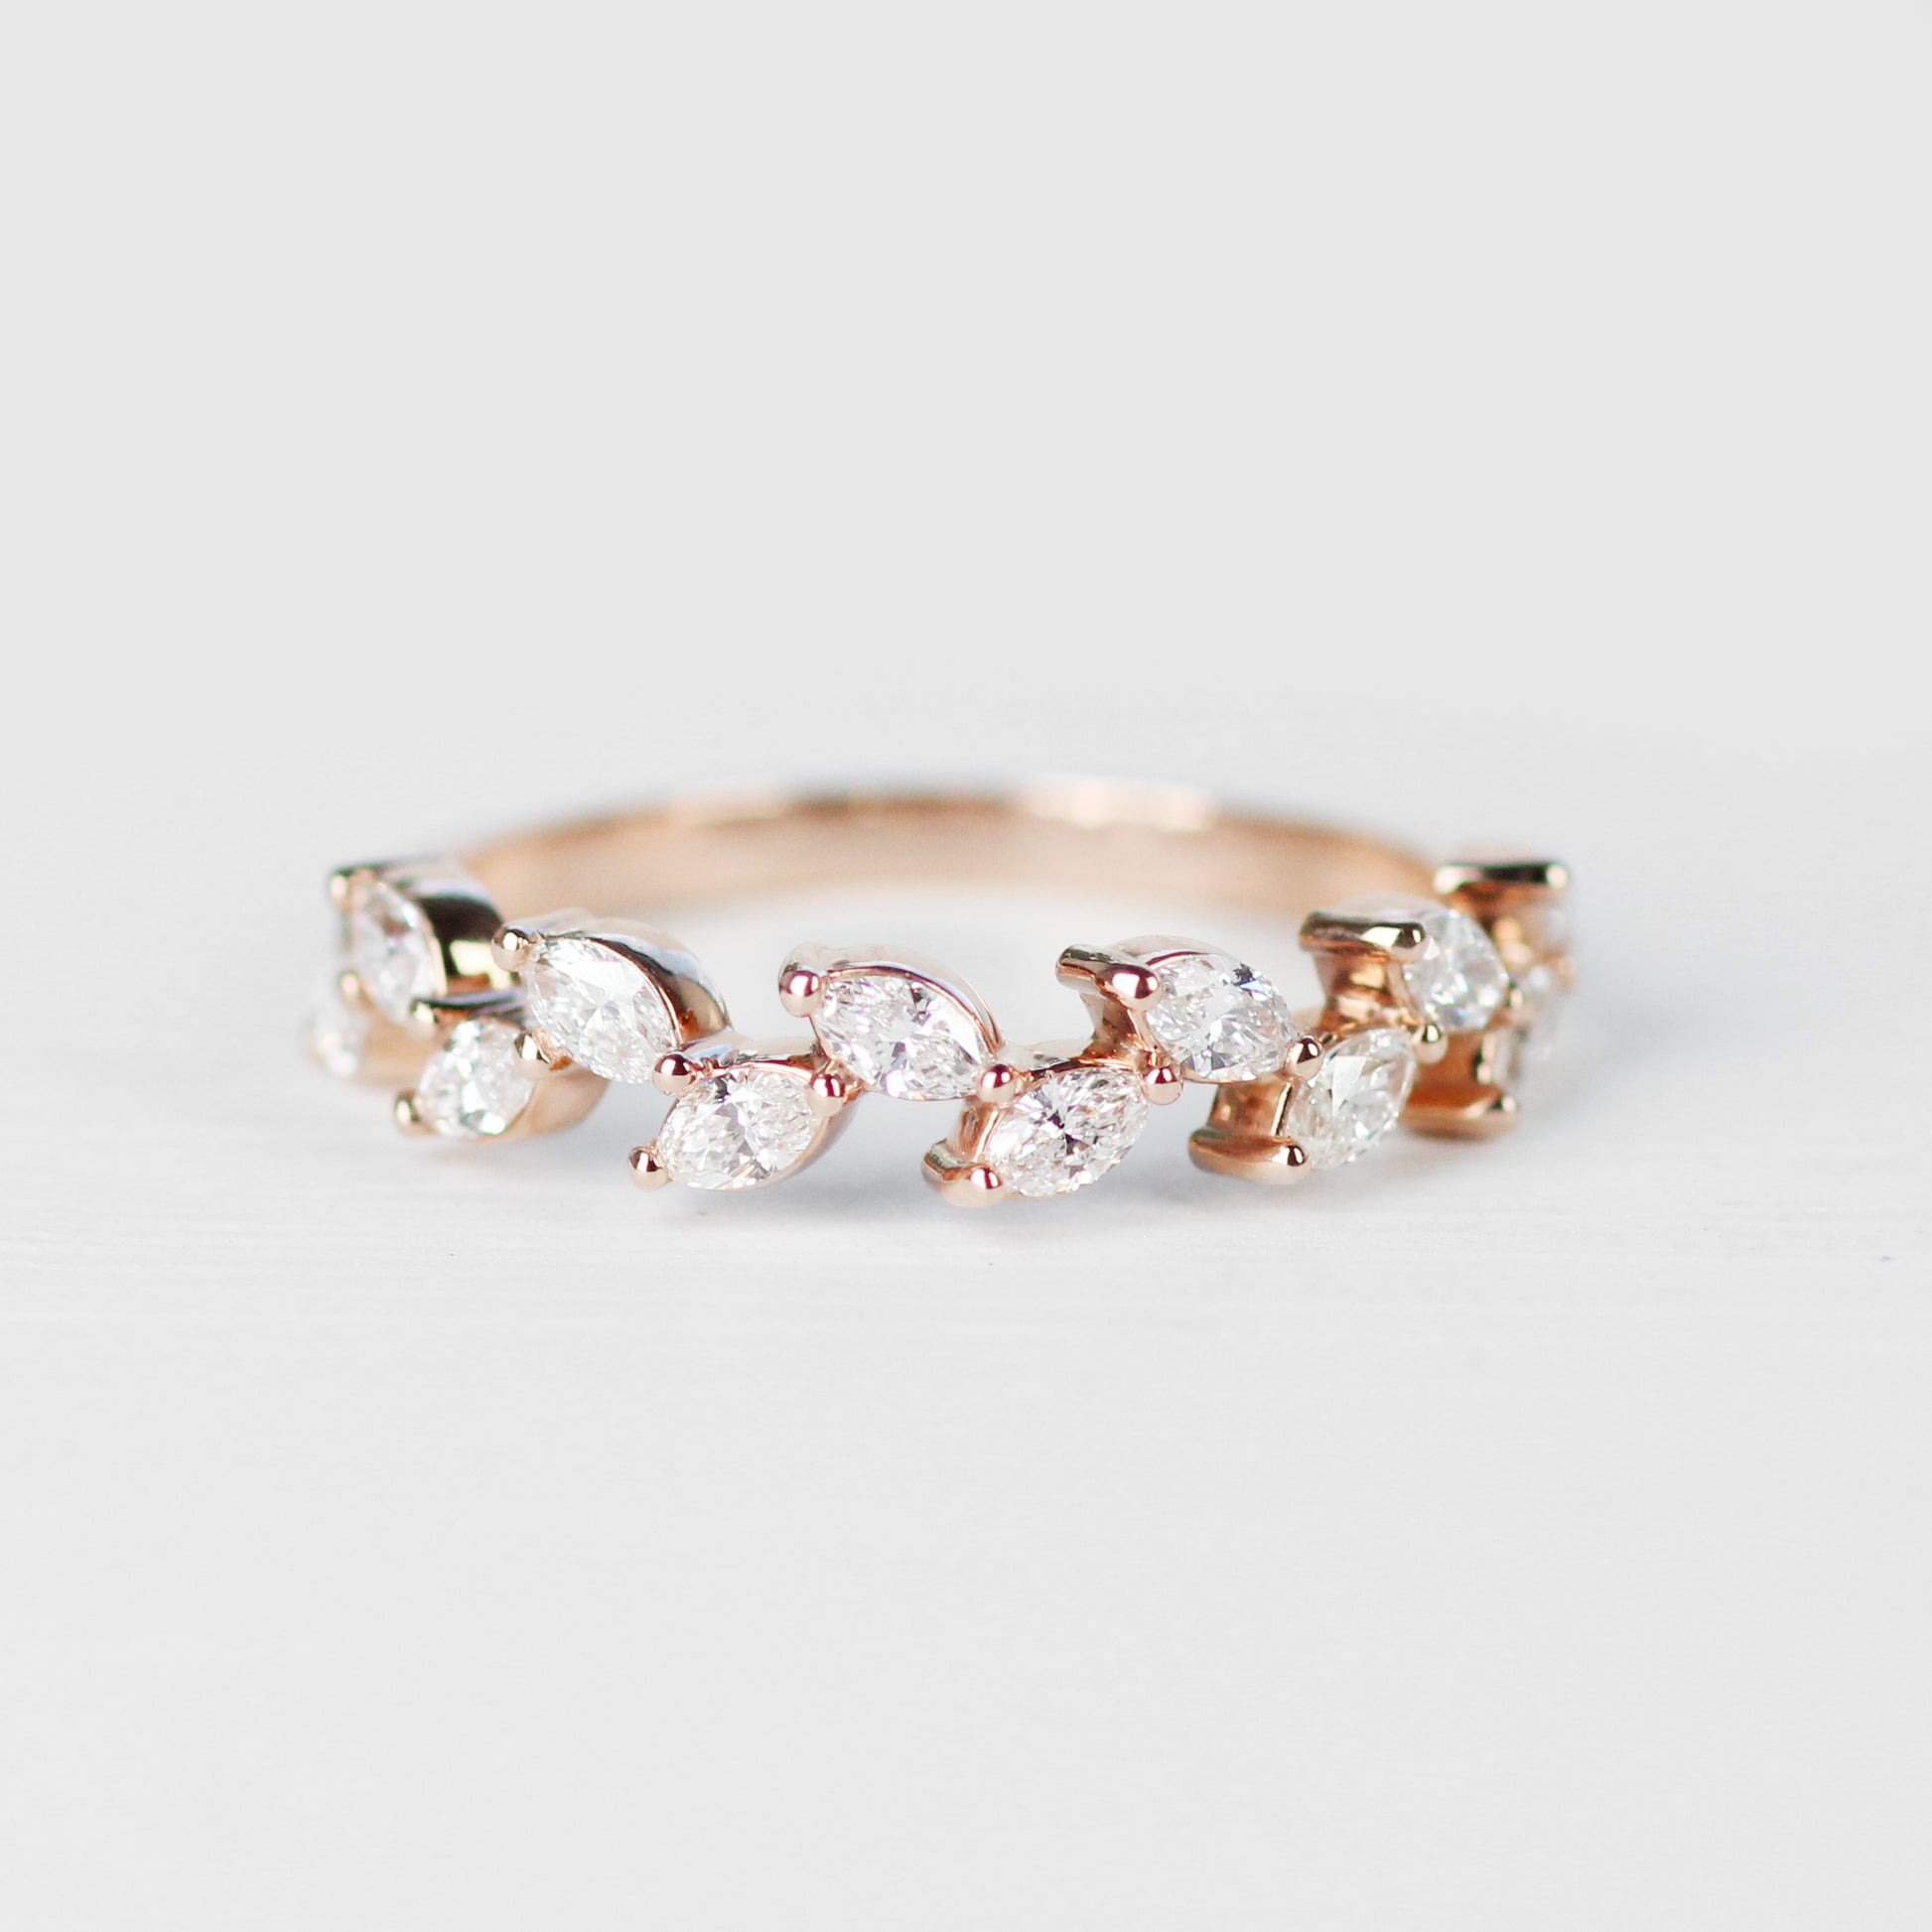 Soren Ring - Leaf diamond engagement / wedding band - Midwinter Co. Alternative Bridal Rings and Modern Fine Jewelry